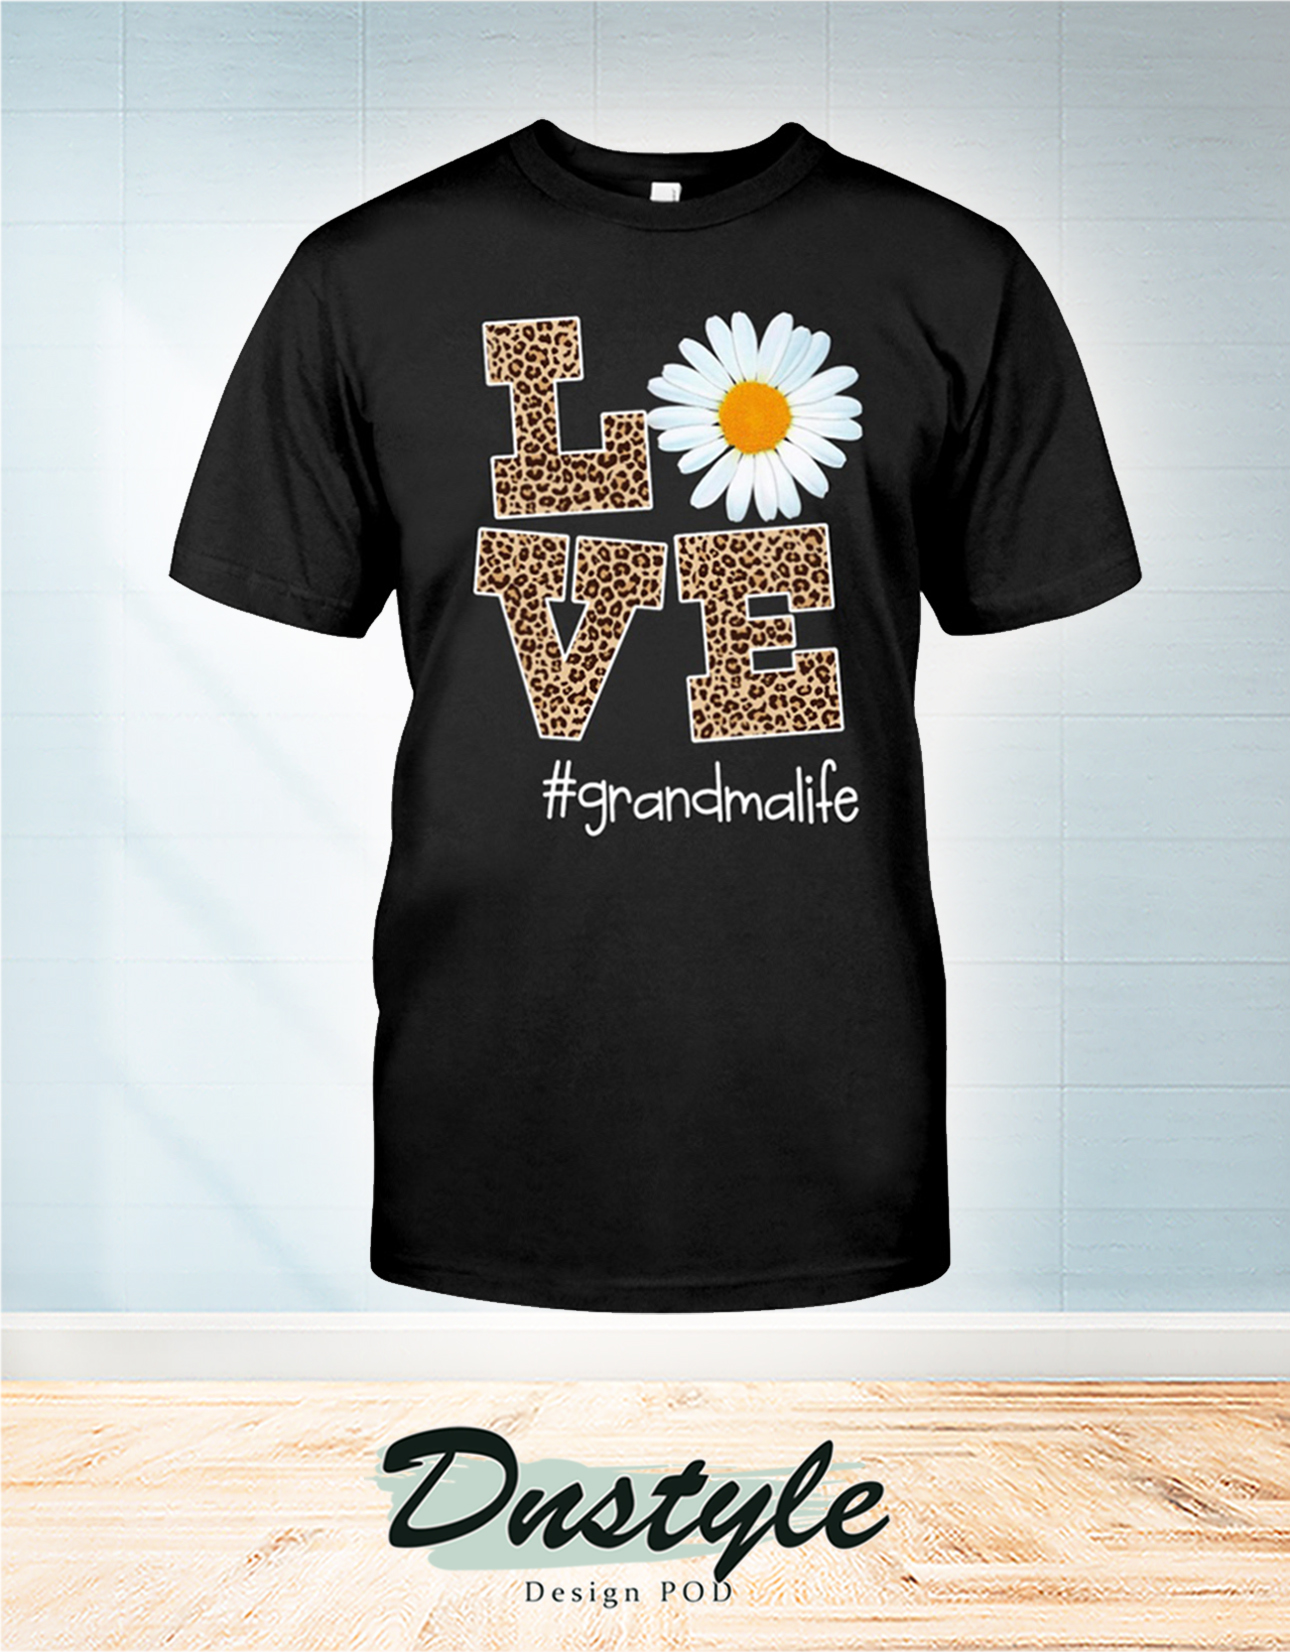 Leopard Daisy love grandma life #grandmalife shirt